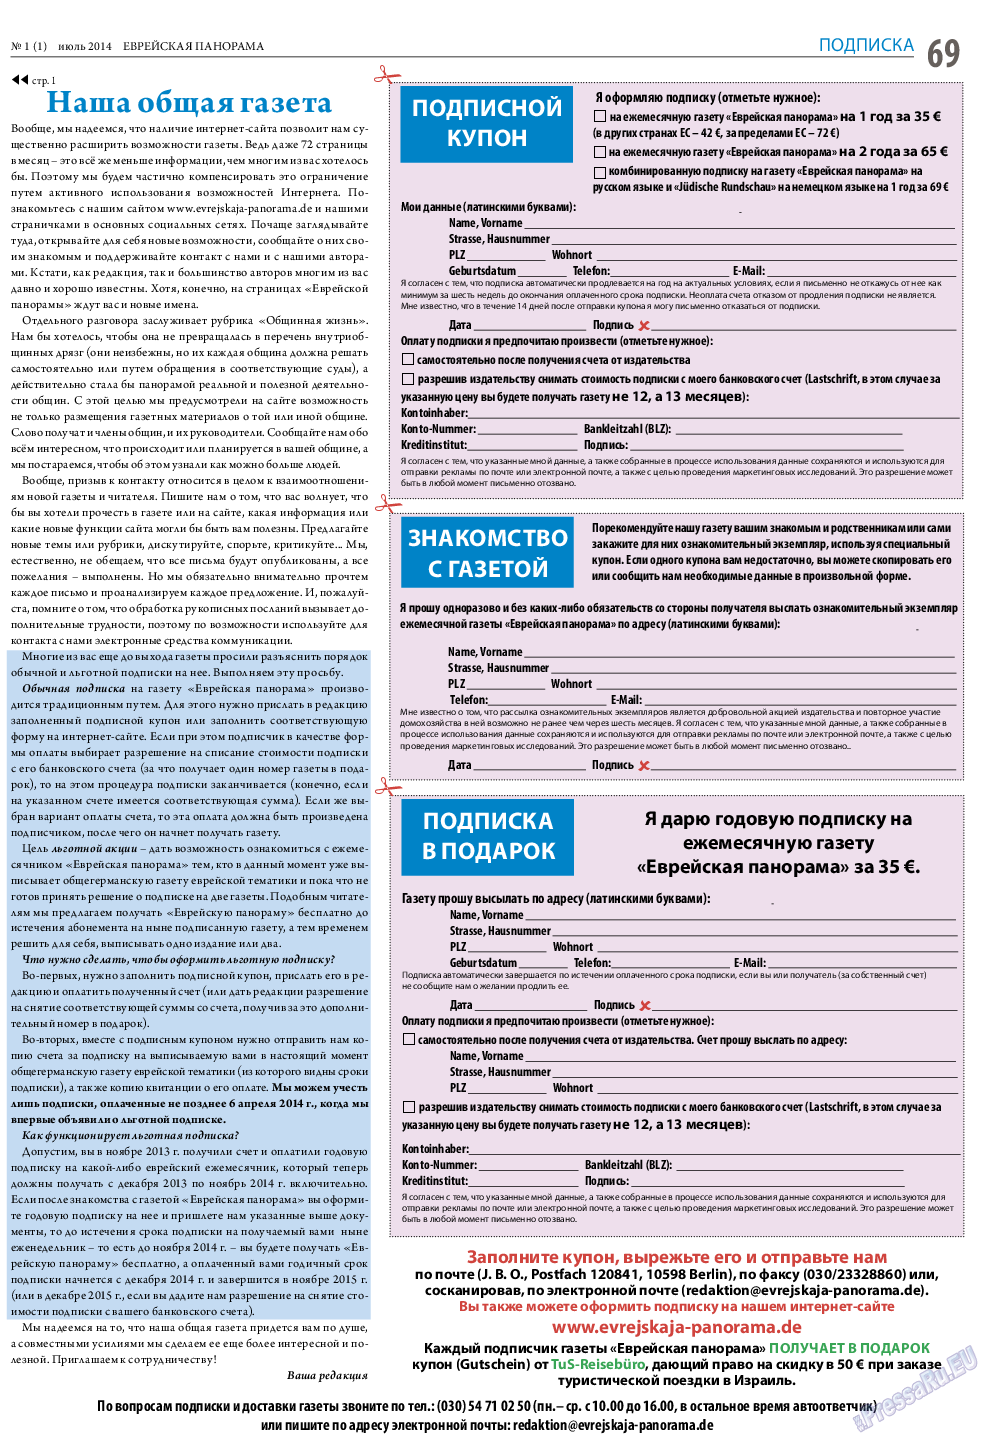 Еврейская панорама, газета. 2014 №1 стр.69